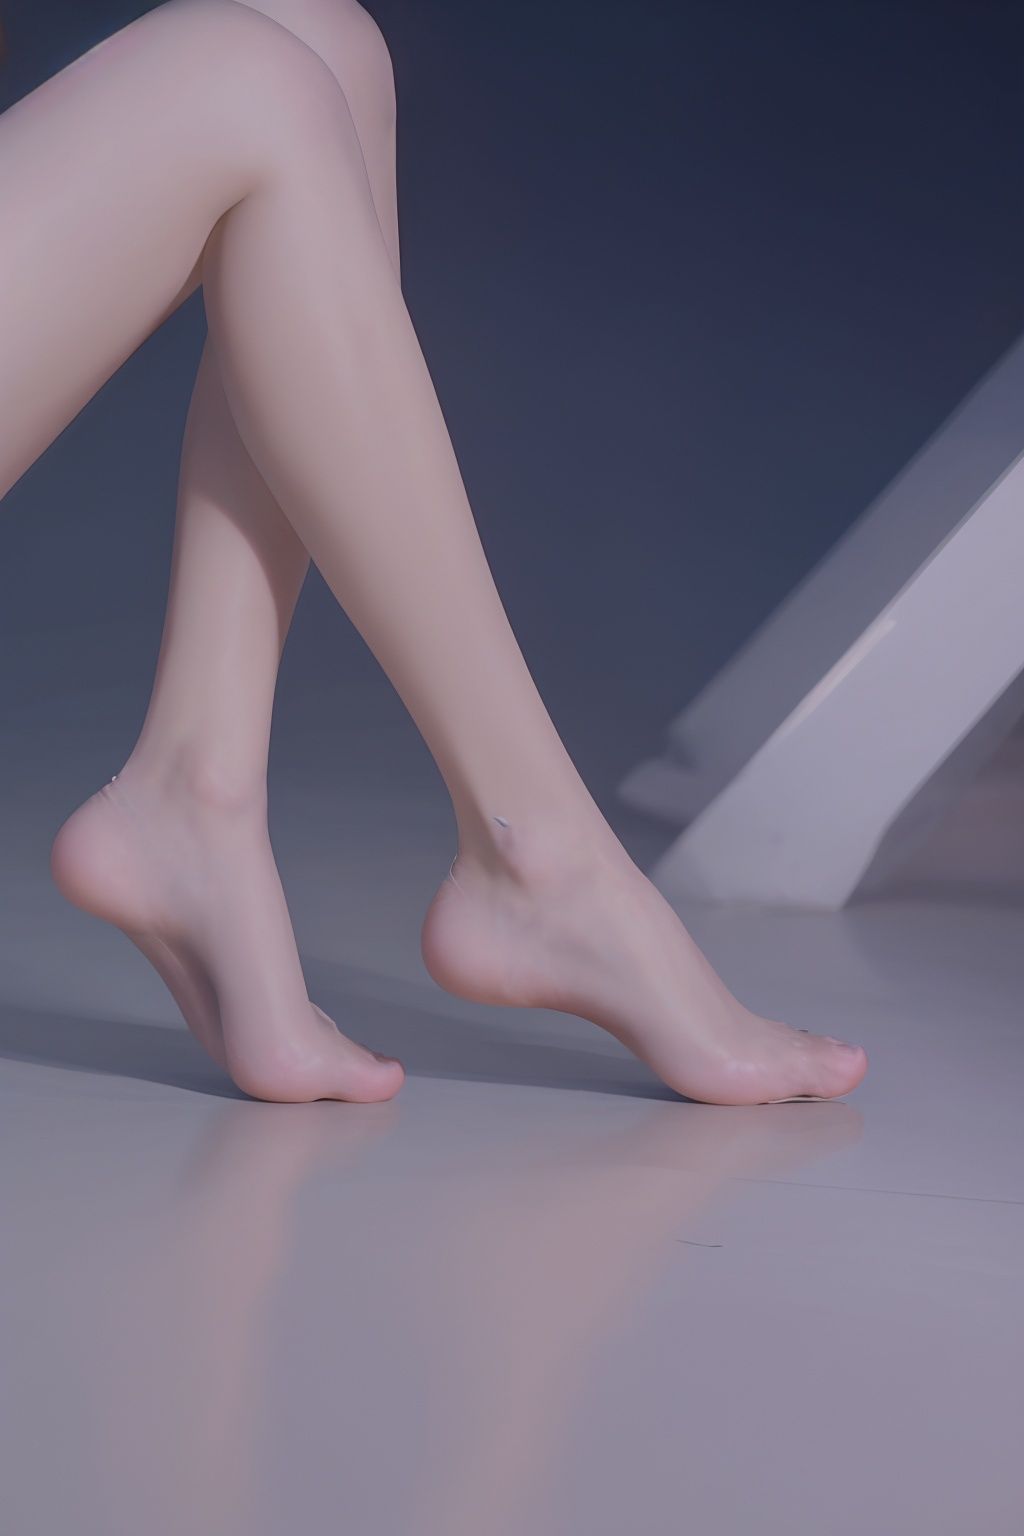  Best quality, 8k, cg,beautiful feet